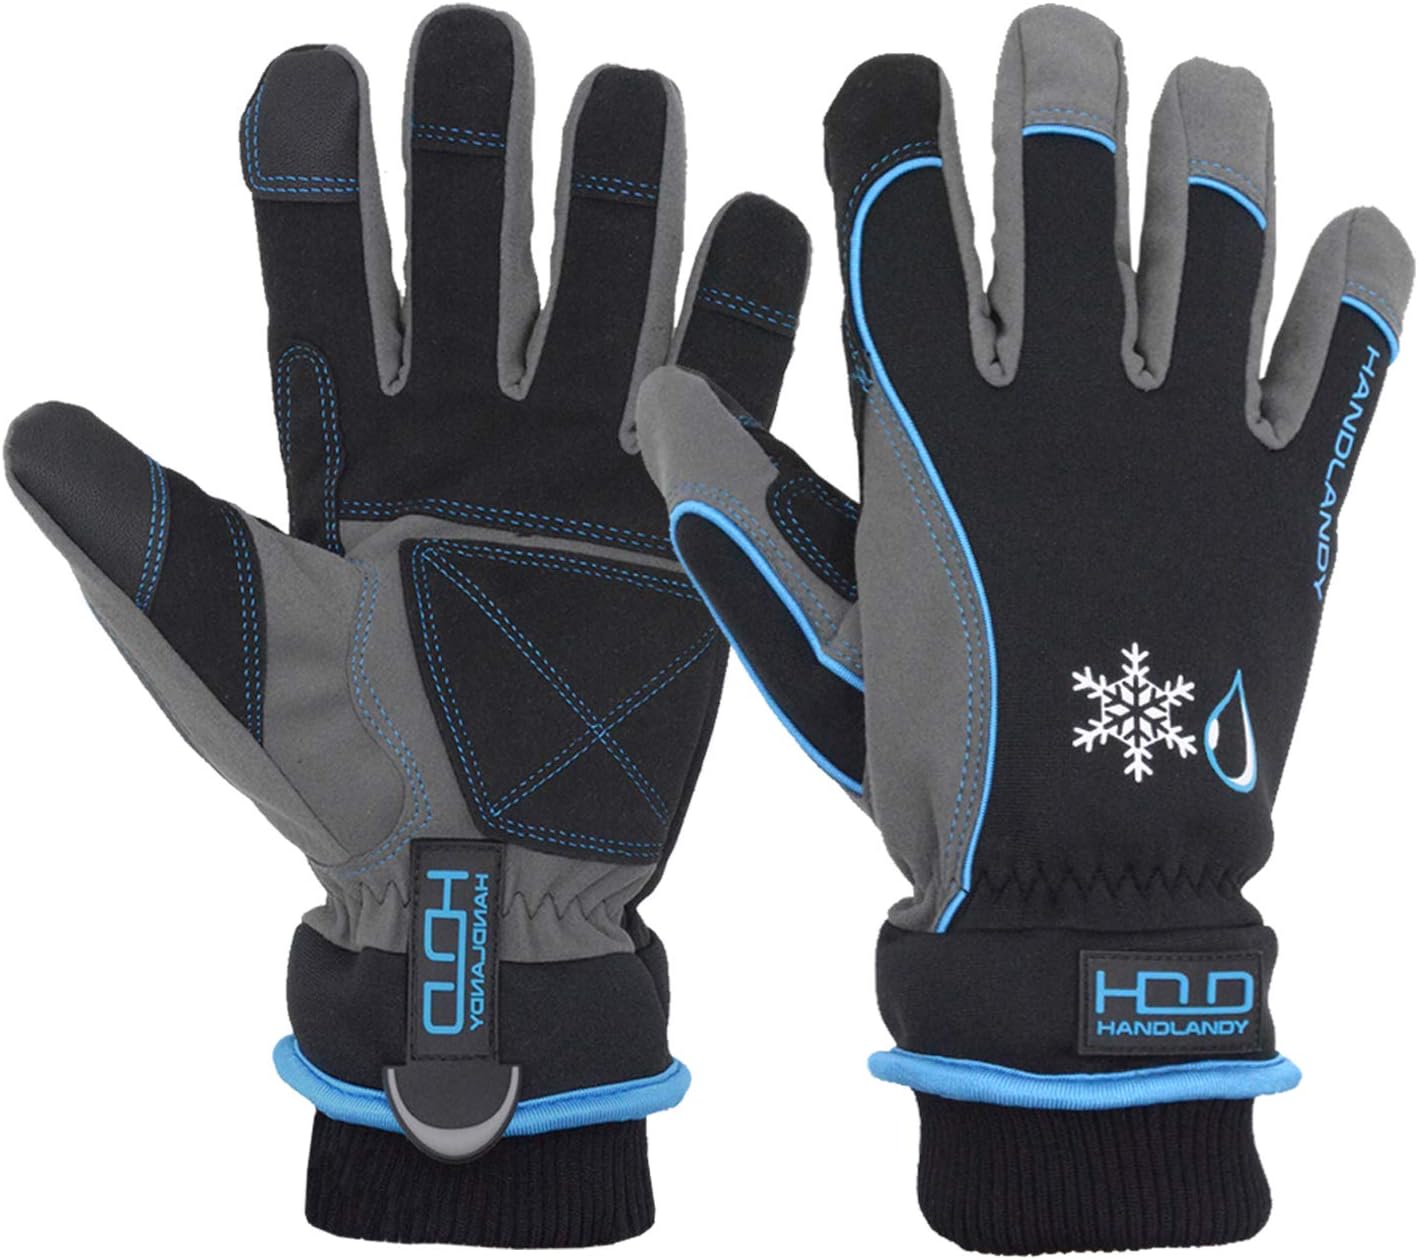 HANDLANDY Waterproof Insulated Work Gloves, 3M [...]